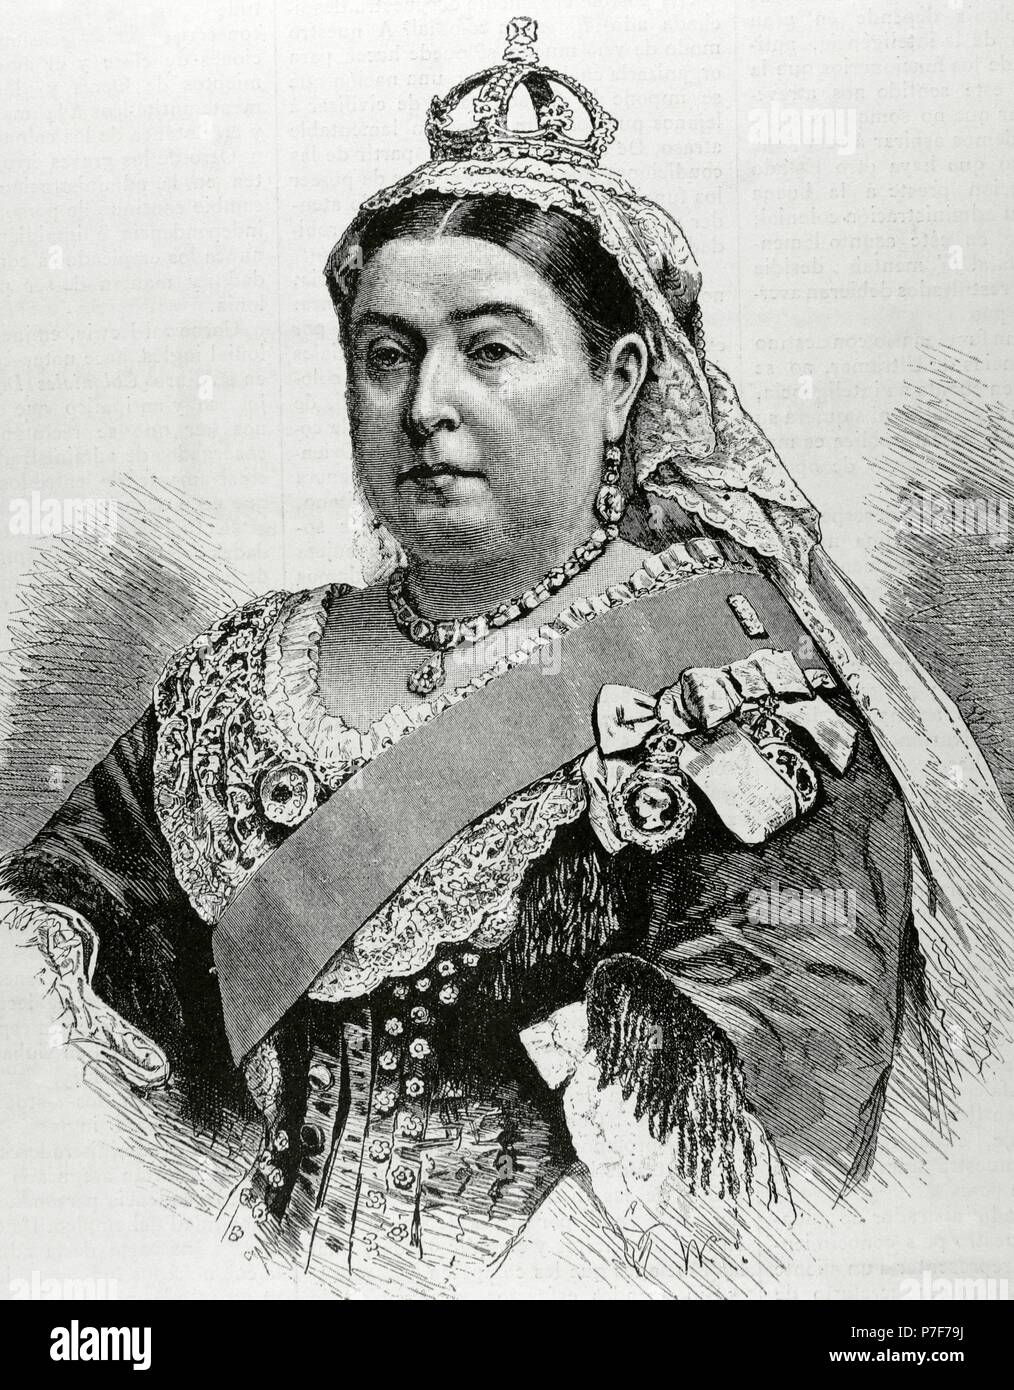 Victoria I (1819-1901). Queen of the United Kingdom of Great Britain and Ireland (1837-1901) and Empress of India (1876-1901). Portrait. Engraving. 'La Ilustracion', 1887. Stock Photo